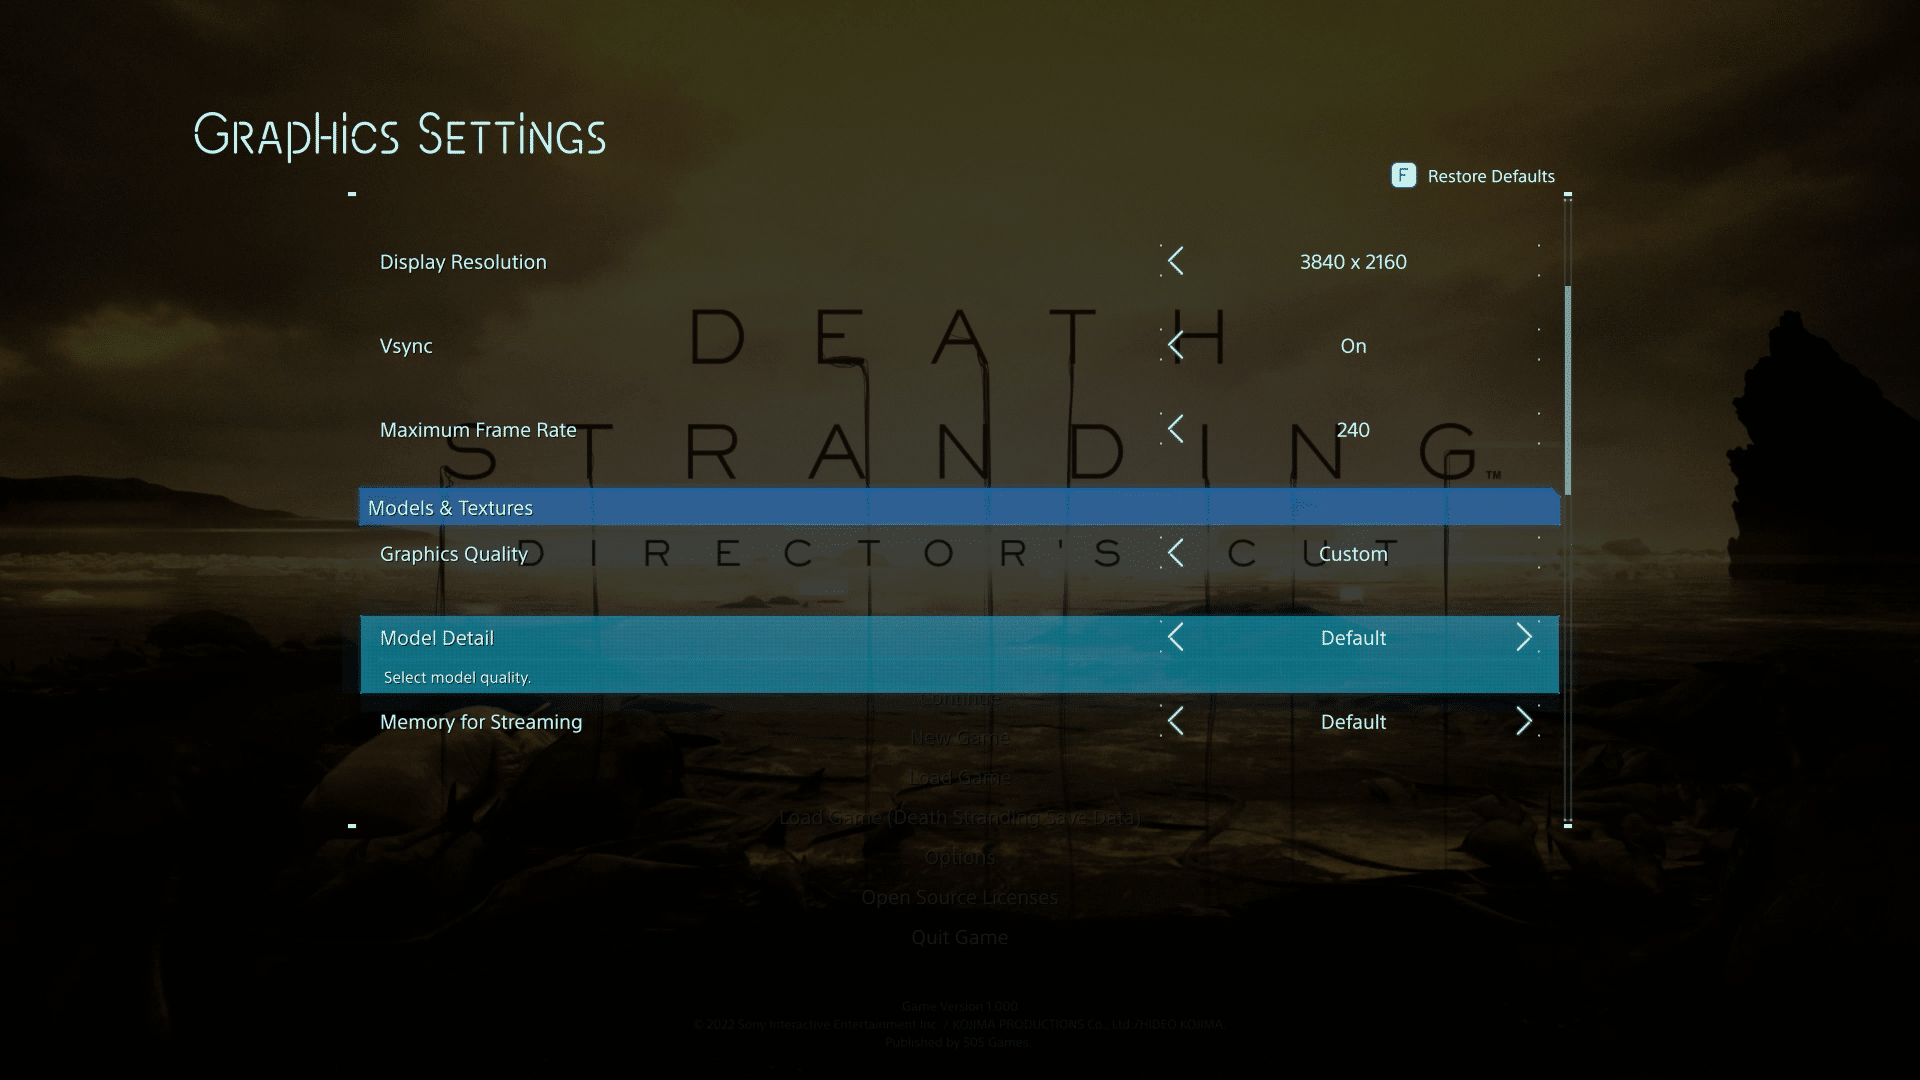 Death Stranding: Director's Cut - still impressive on PC, but